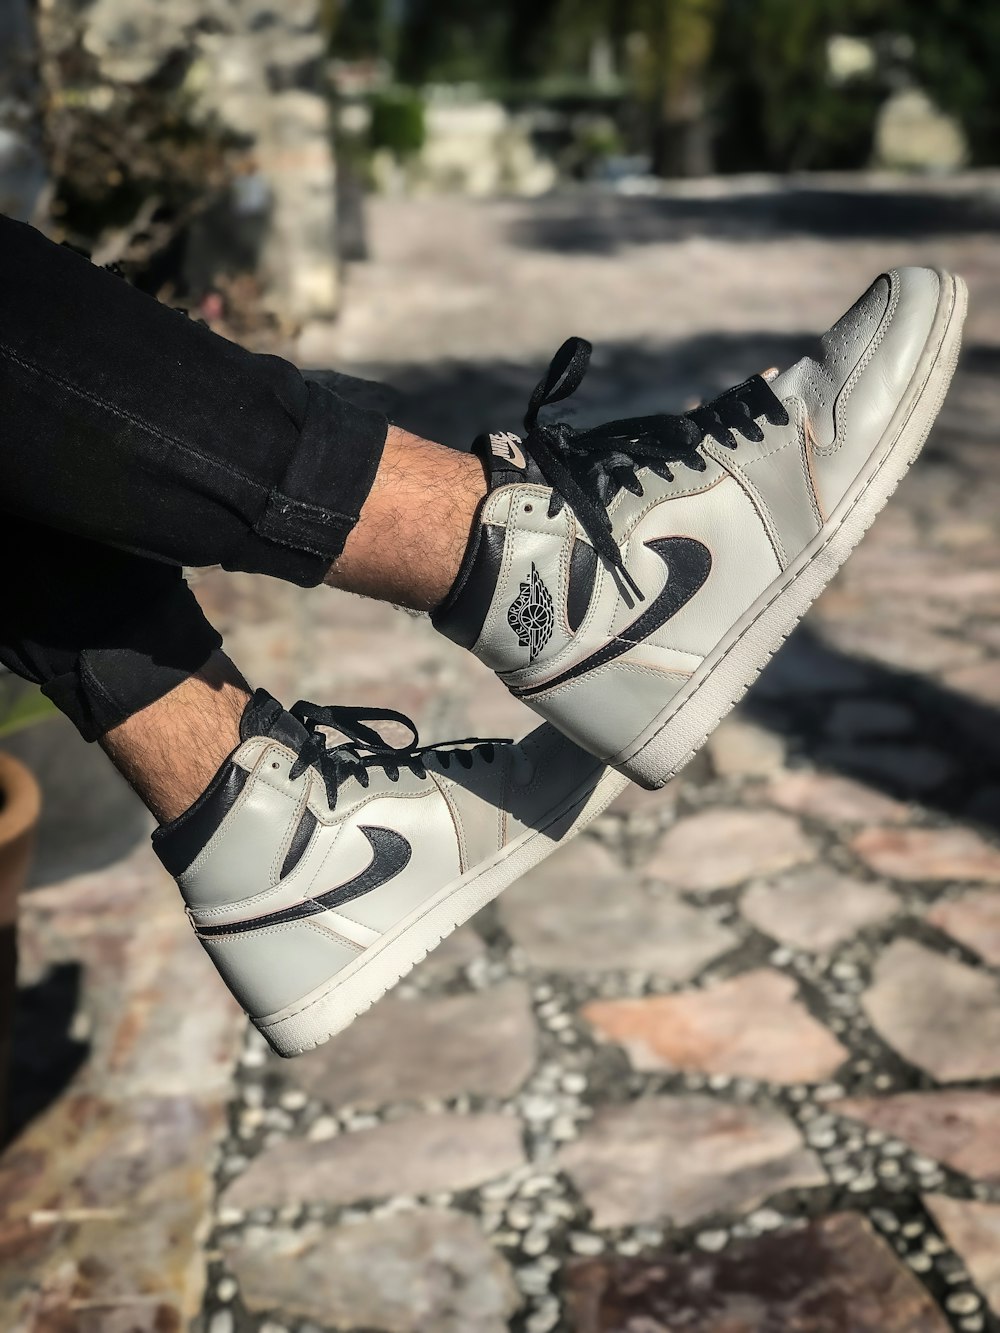 pair of white-and-black Air Jordan basketball shoes